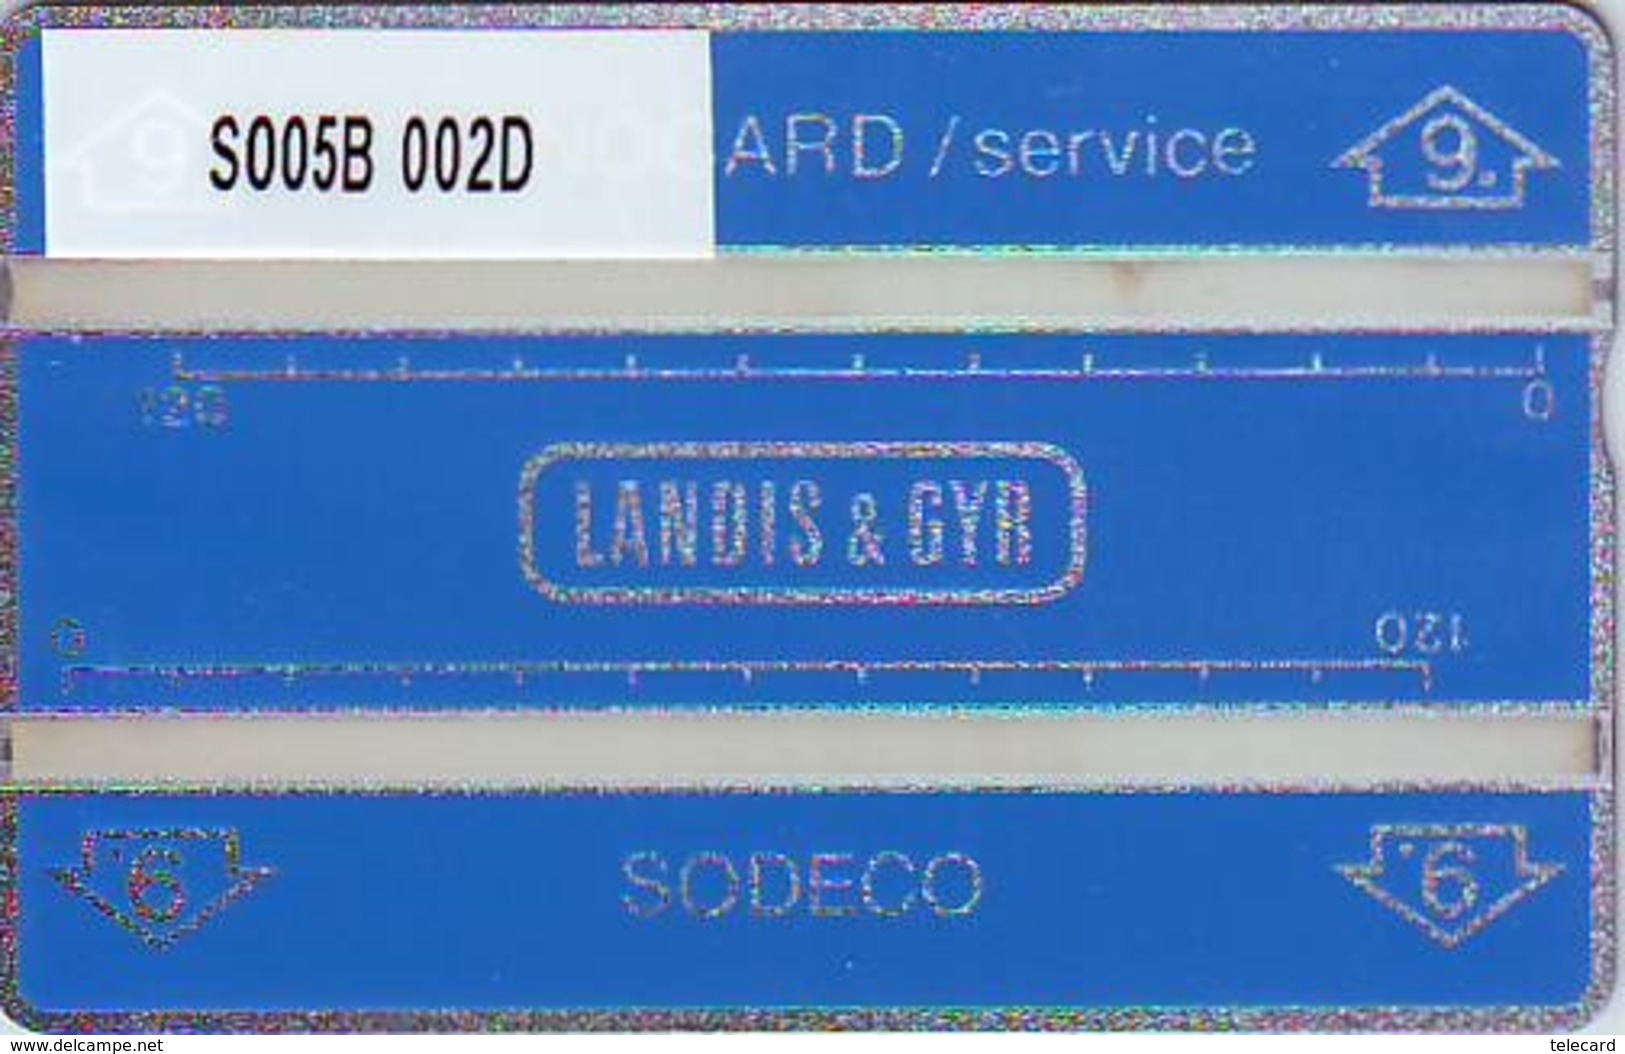 NEDERLAND LANDIS&GYR * SODECO * SERVICE CARD NR S005B 002D  "9"  3 Mm ONGEBRUIKT *  MINT - [4] Test & Servicios